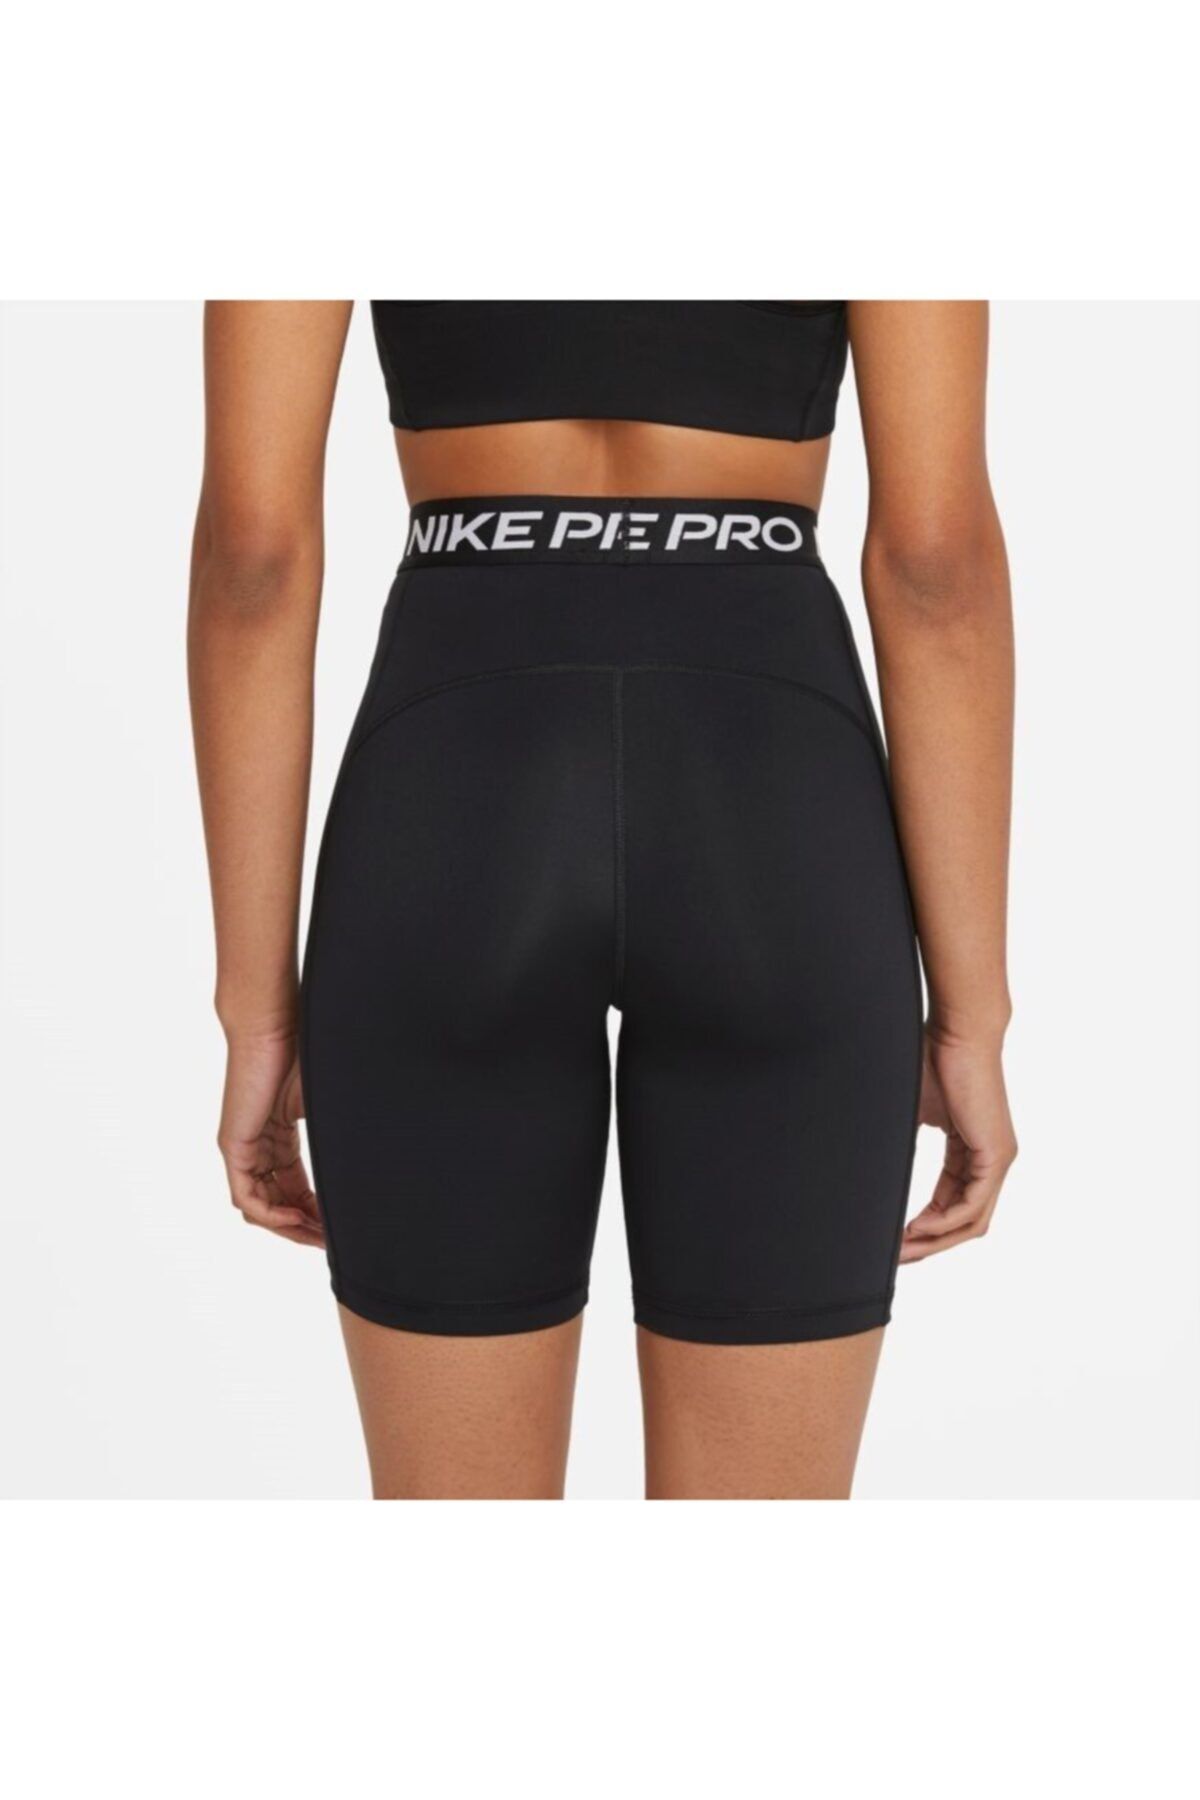 Nike Pro 365 Women's Tights